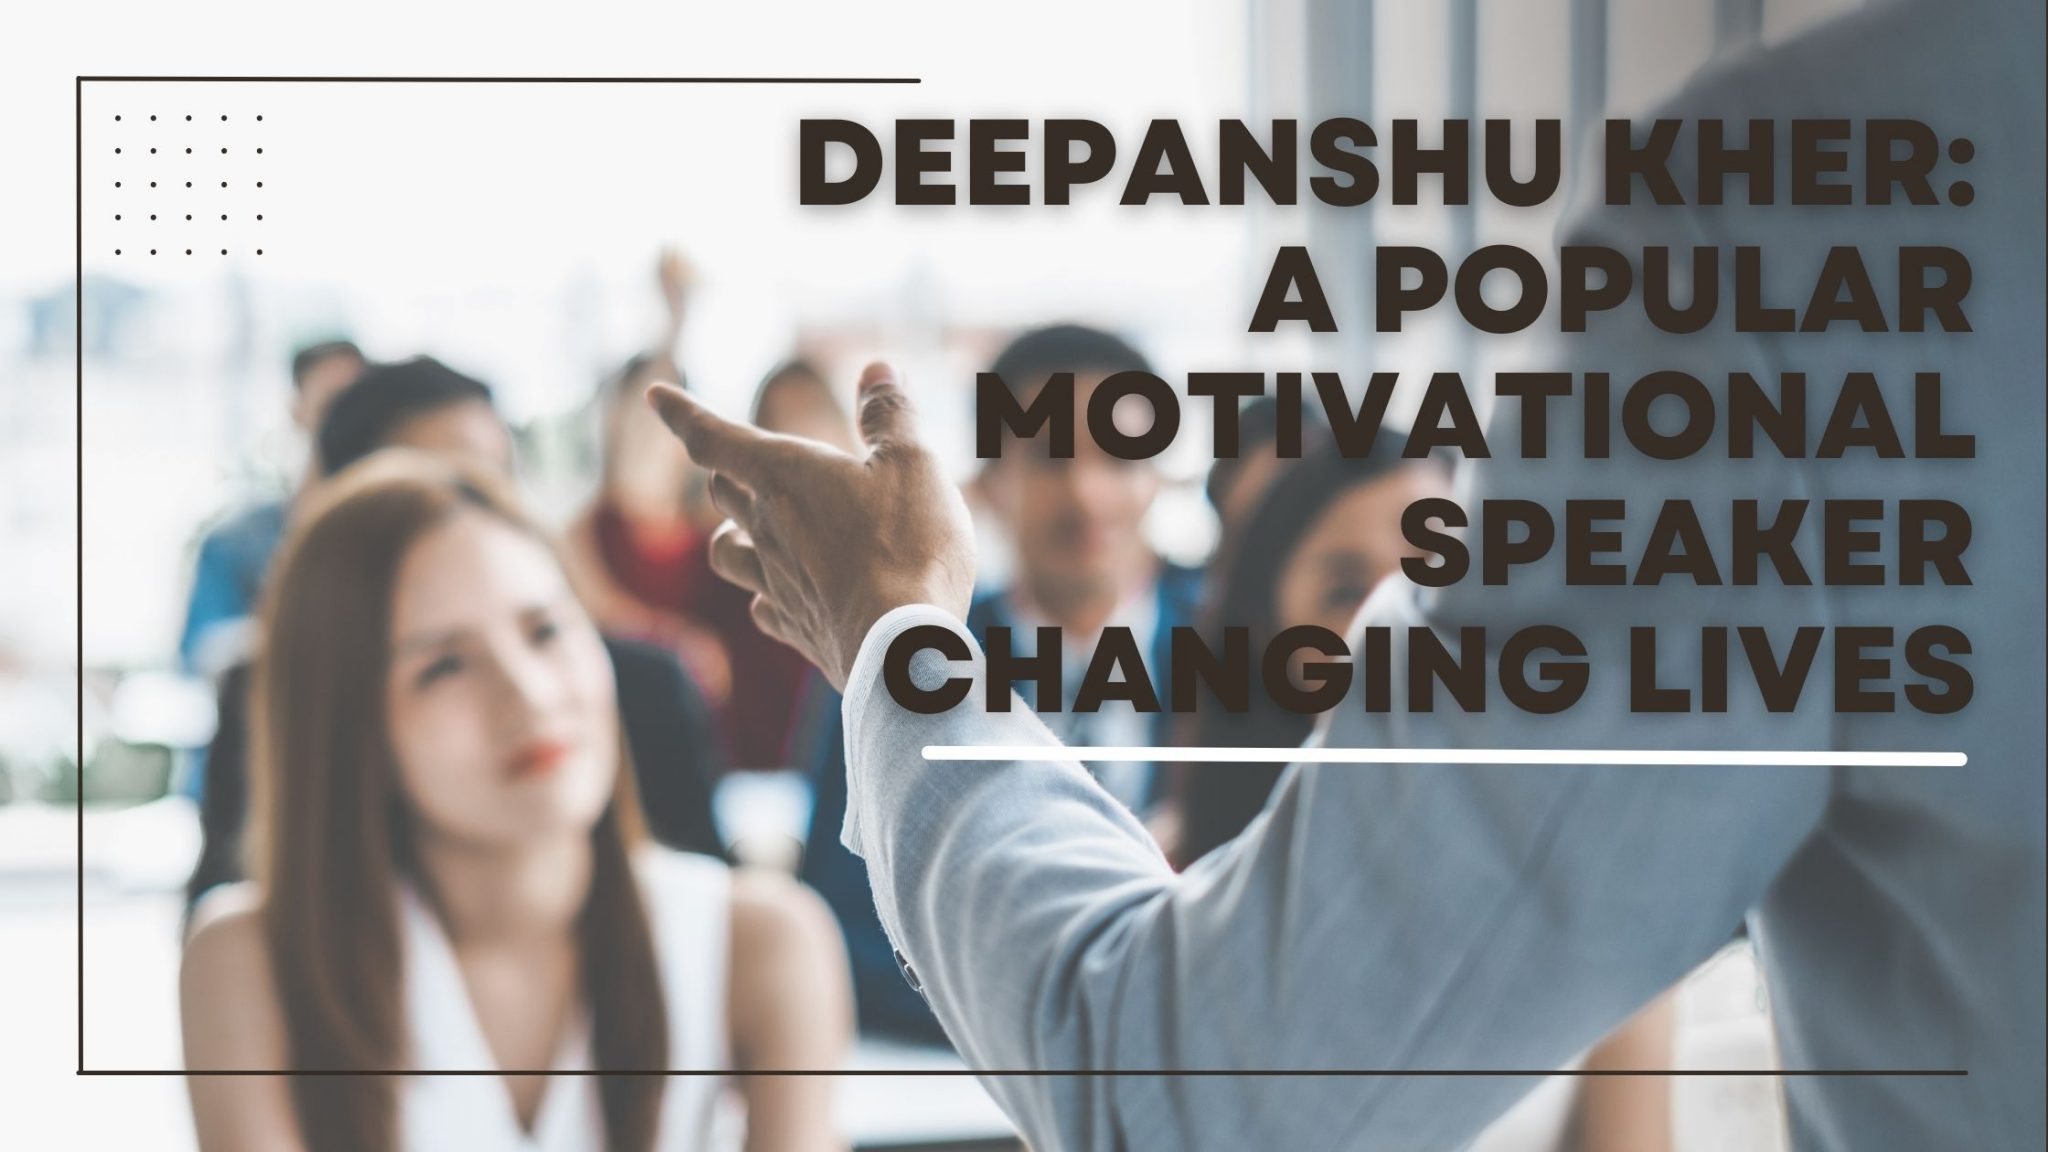 Deepanshu Kher A Popular Motivational Speaker Changing Lives